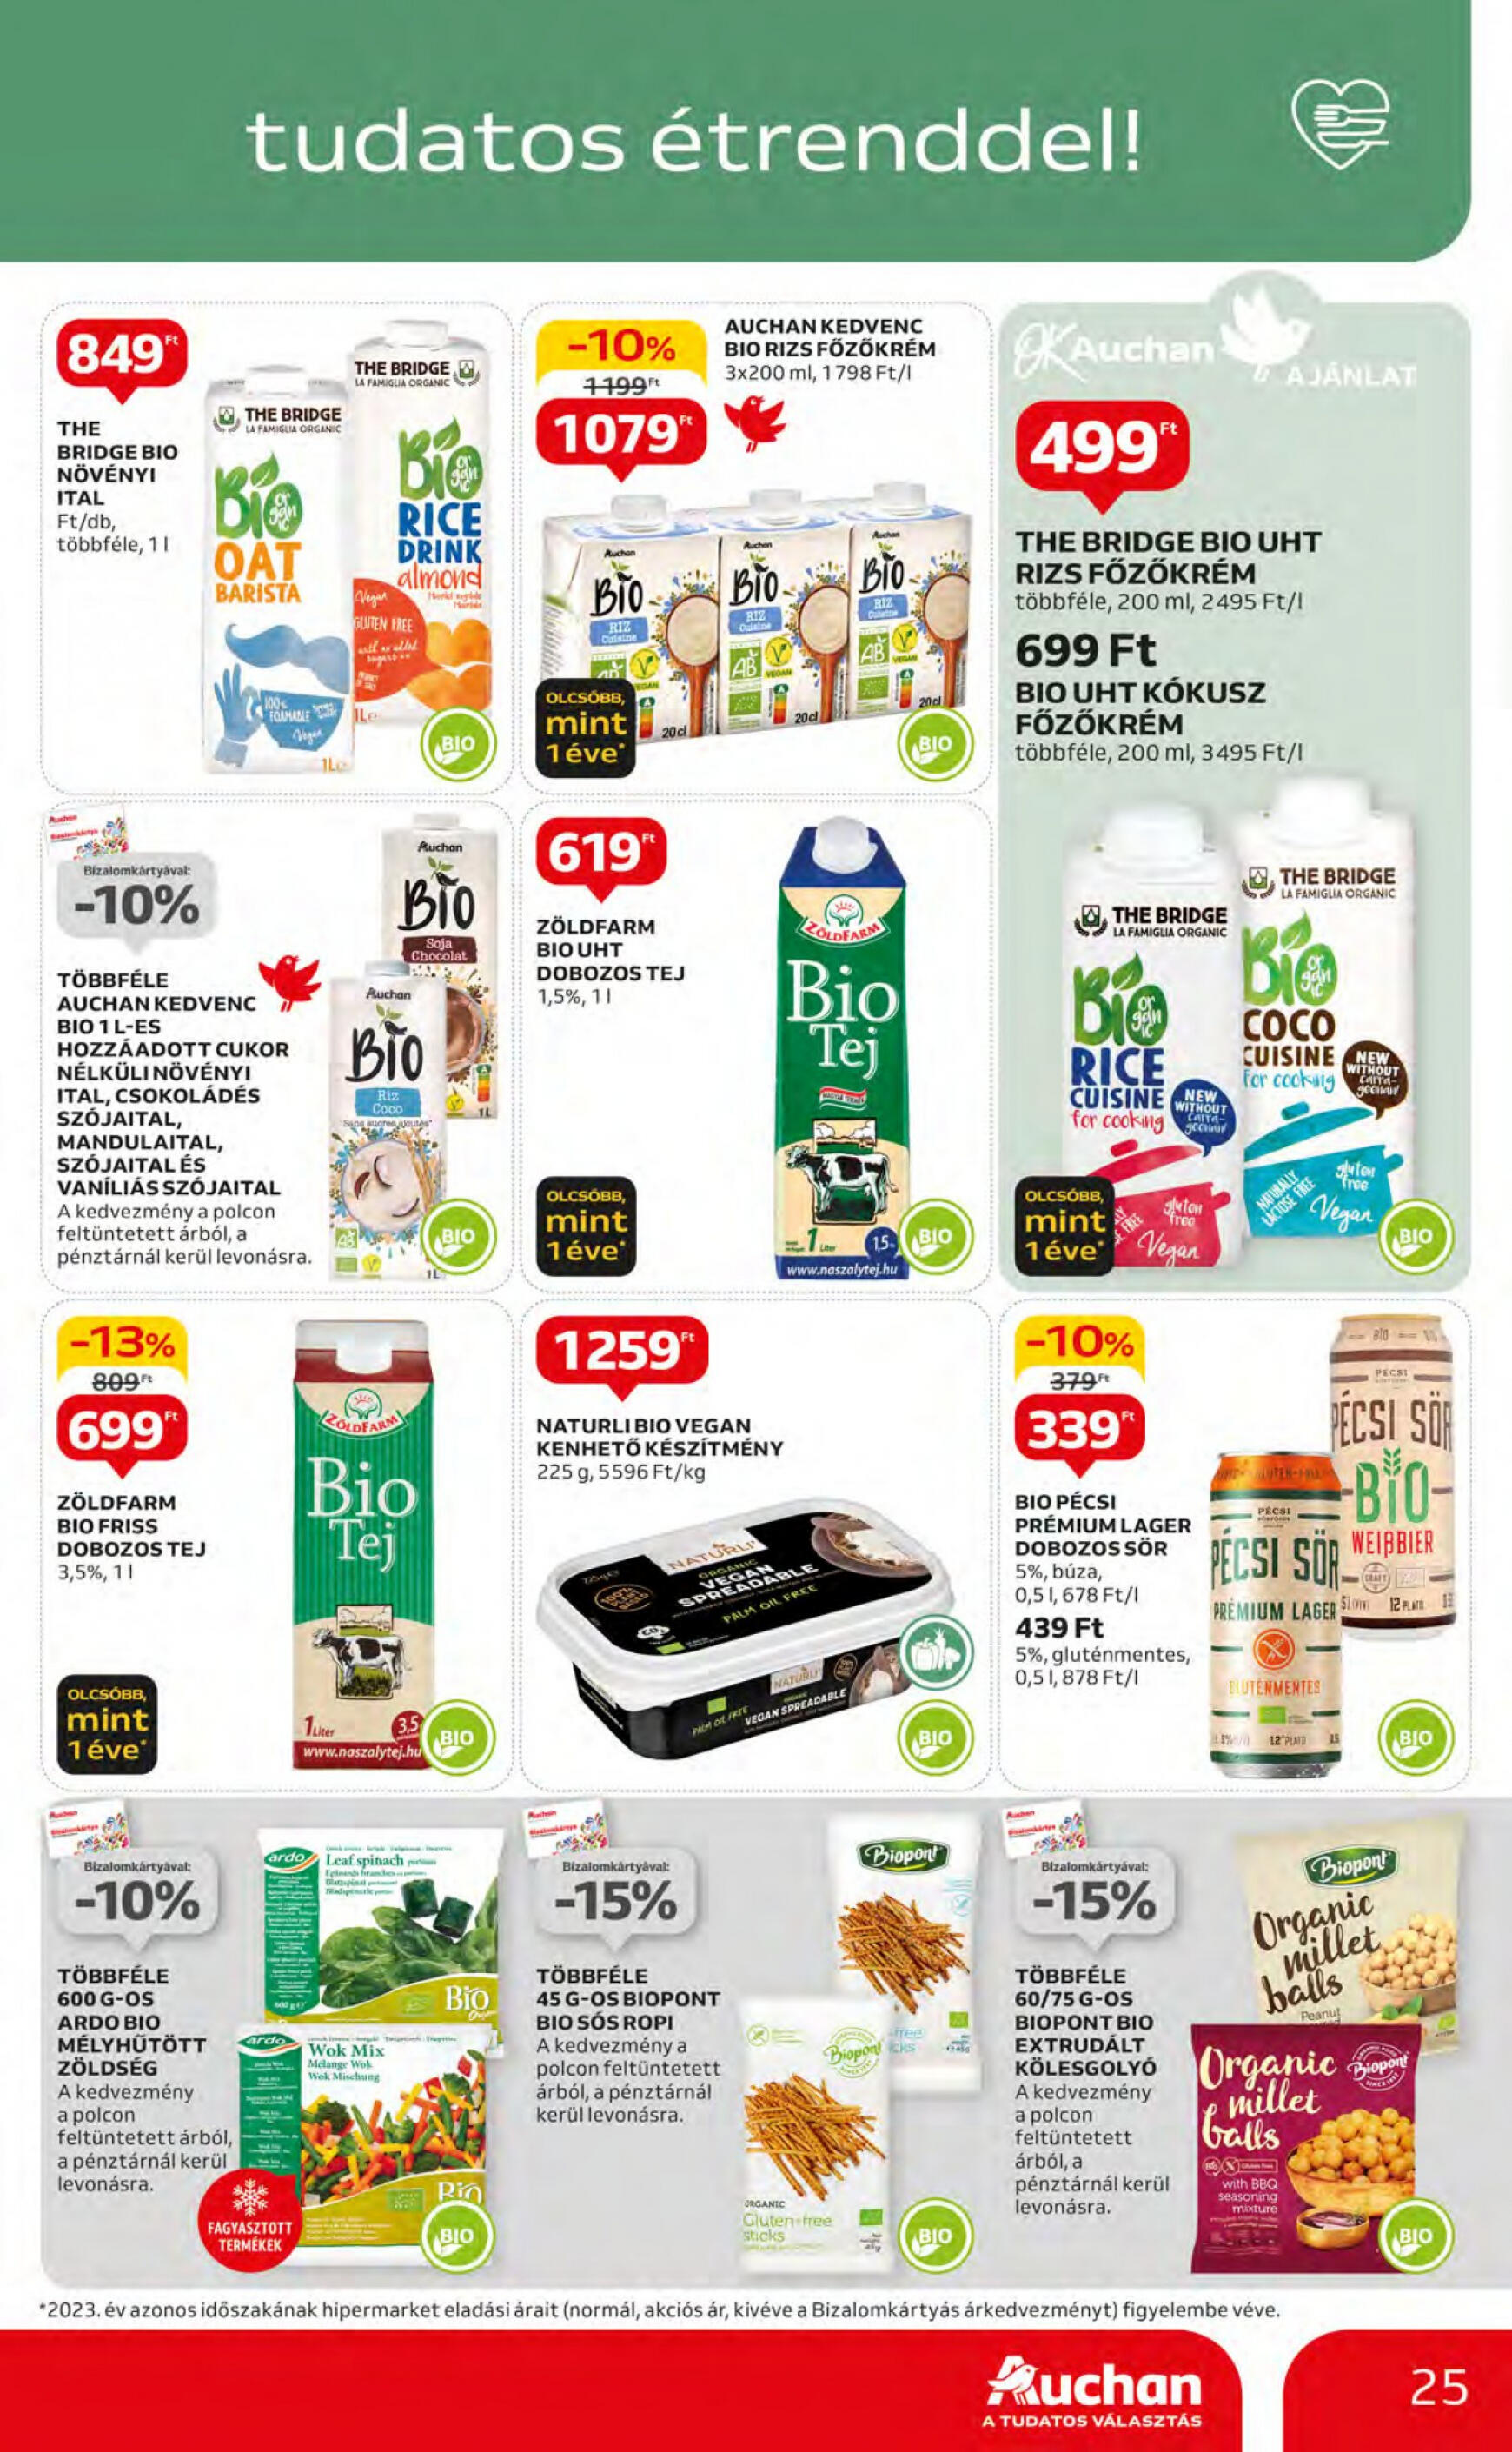 auchan - Aktuális újság Auchan 05.09. - 05.15. - page: 25